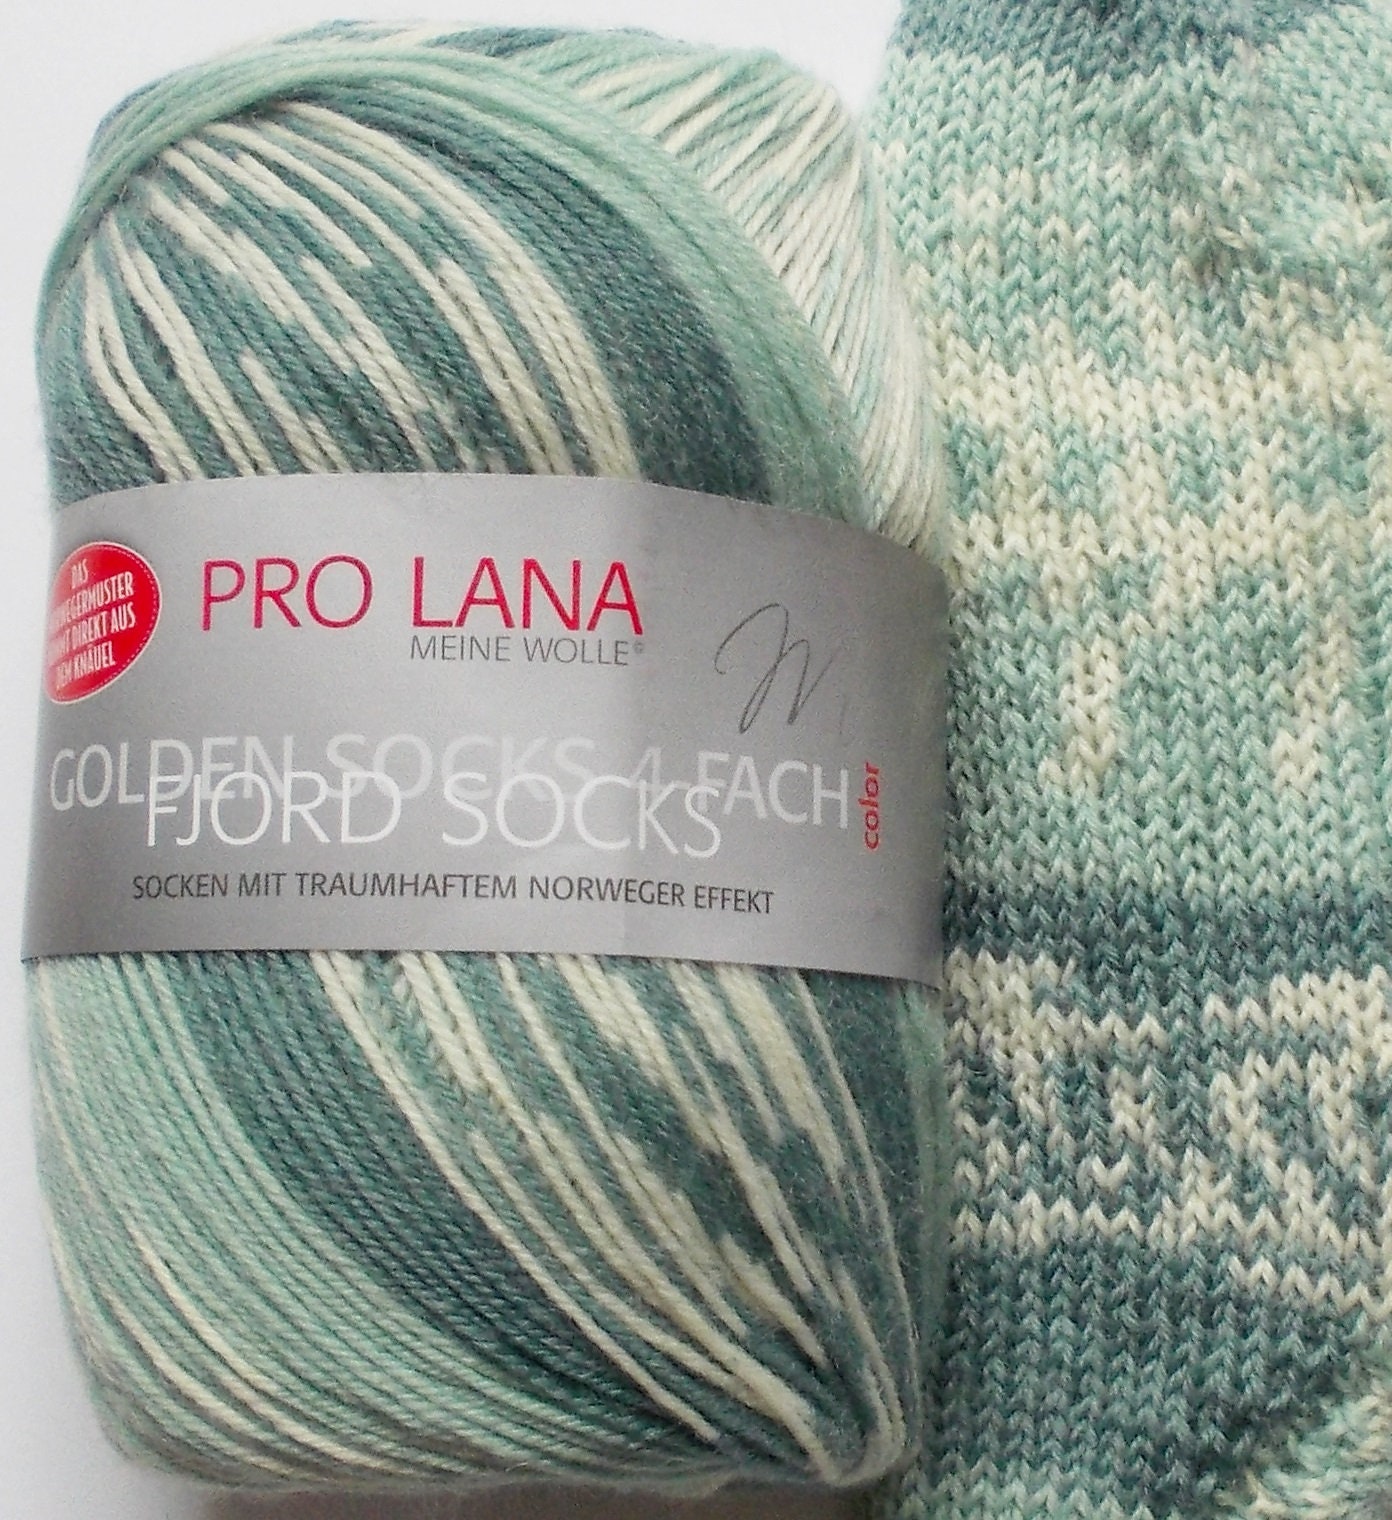 sock yarn 100g 4ply Pro lana 6,95 Euro100g green-gray PLSchiL462